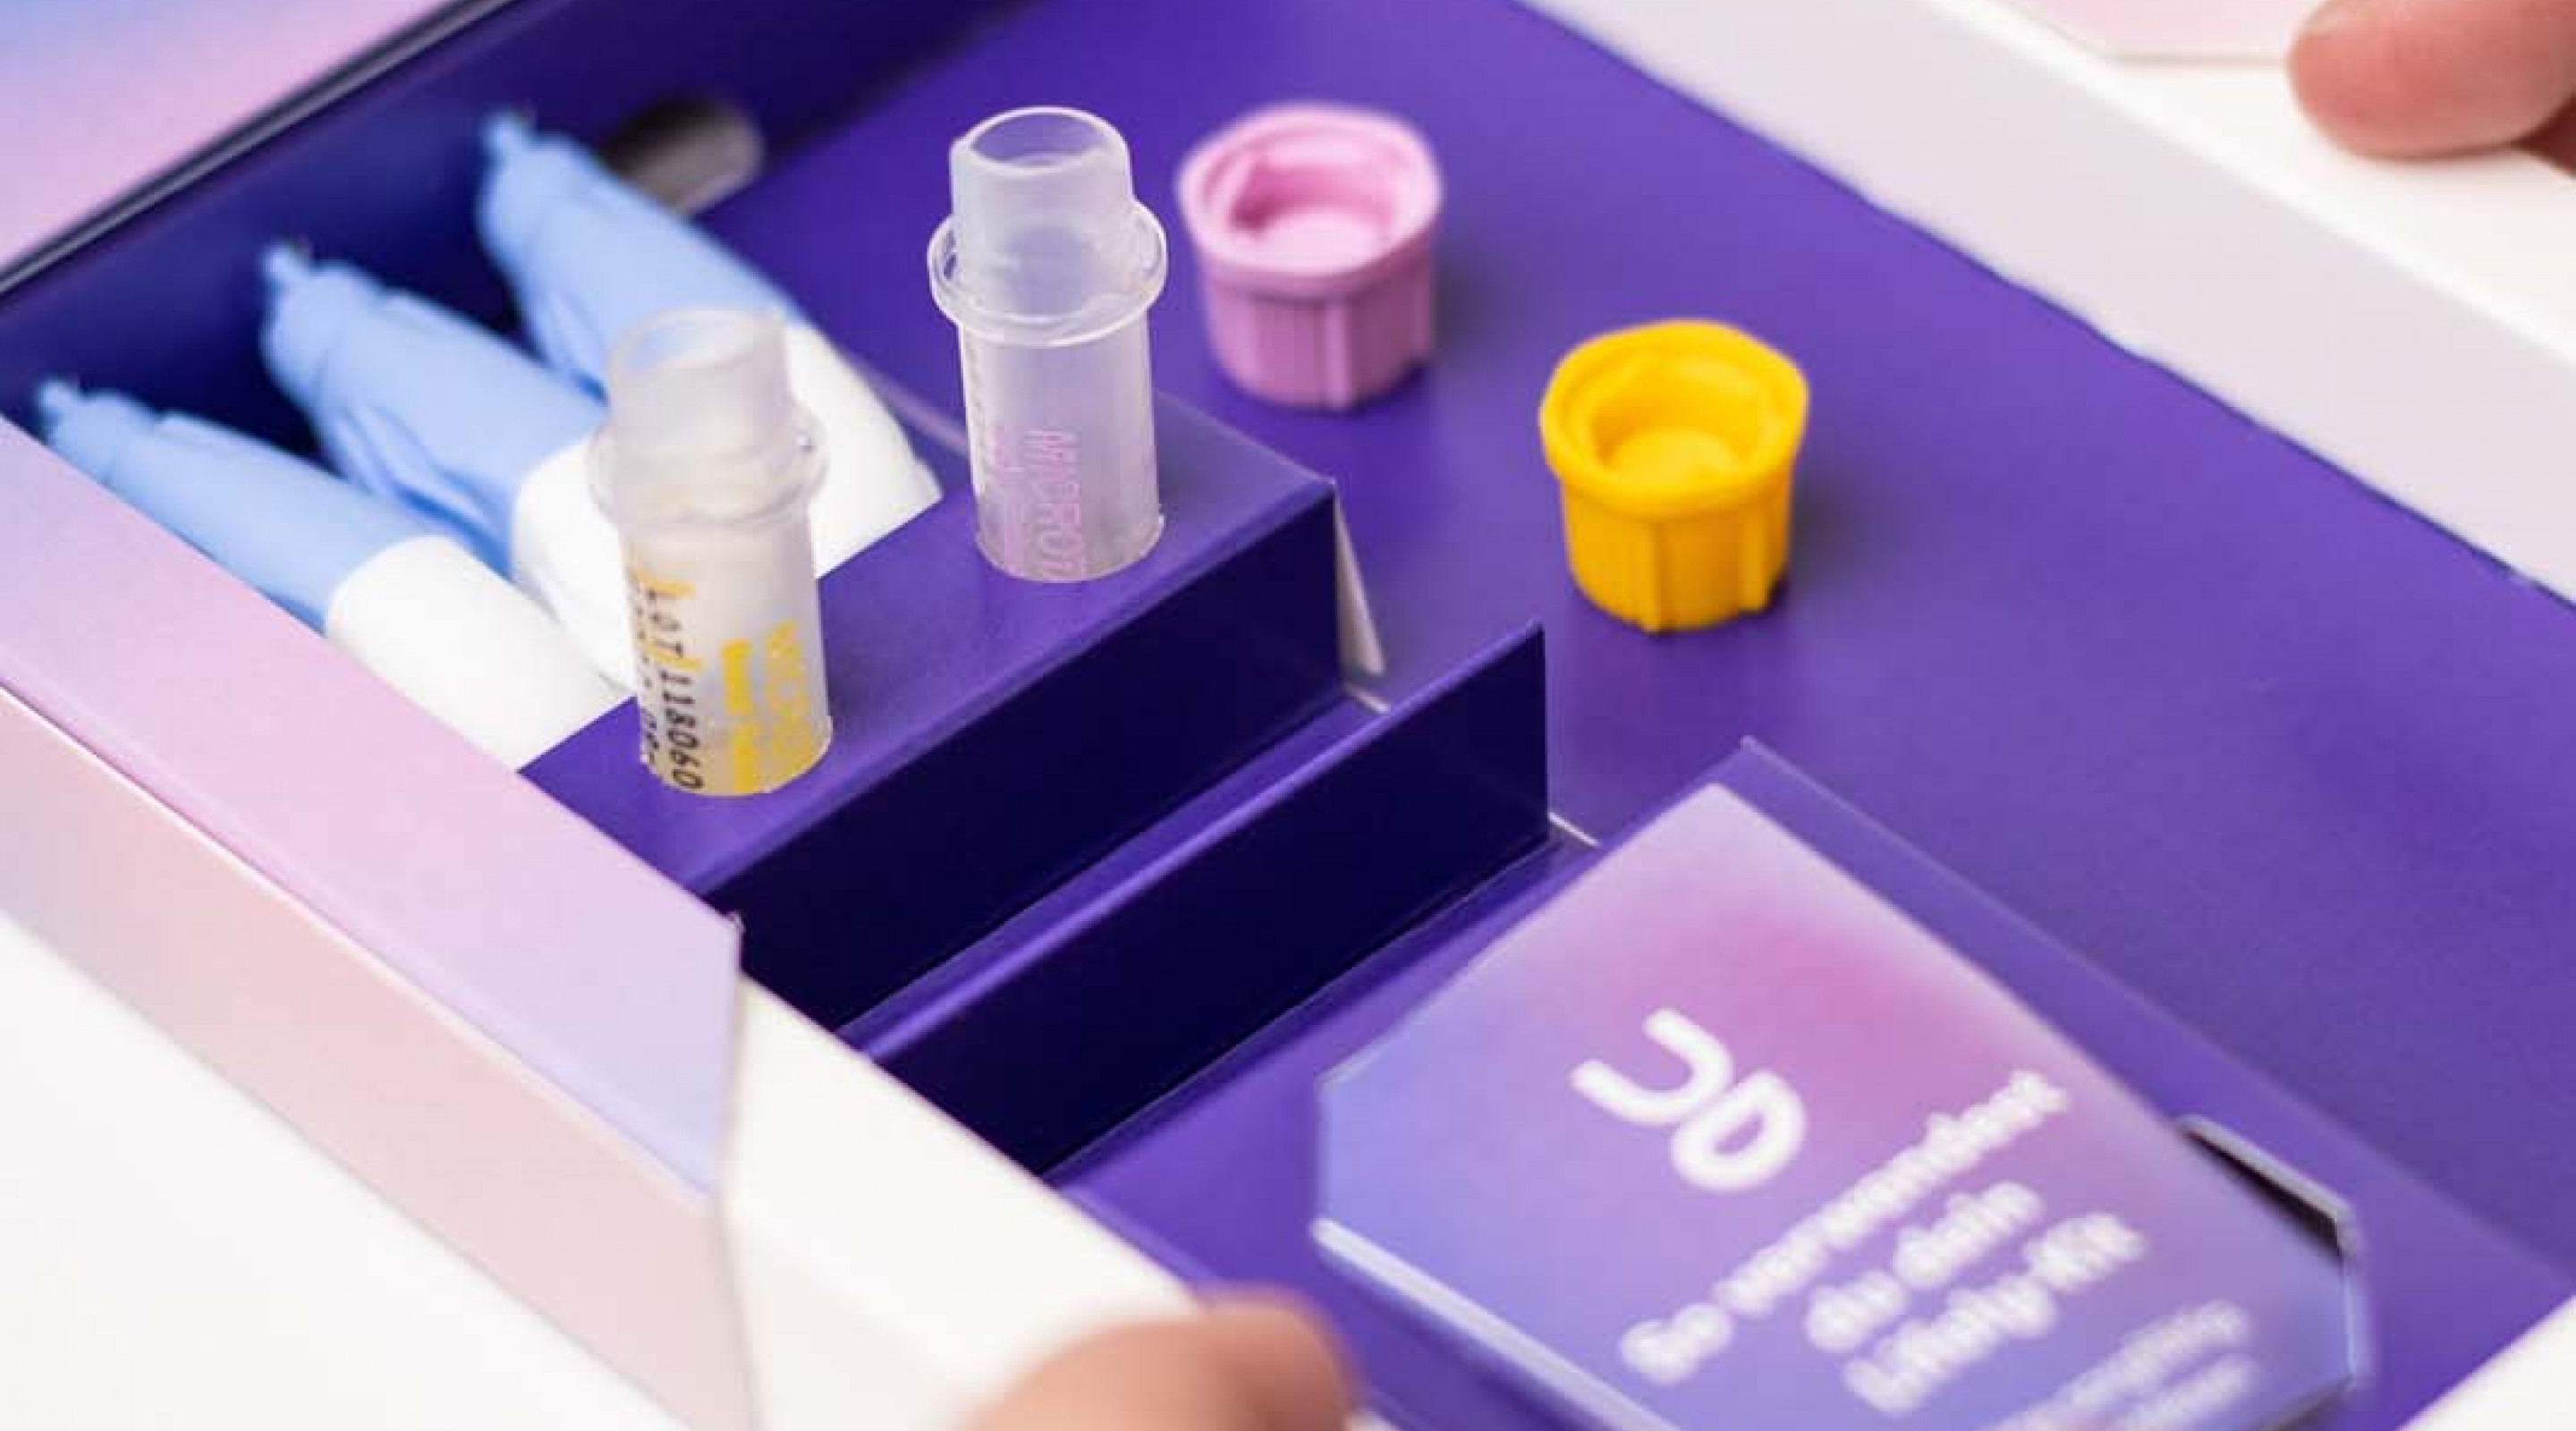 H9 Testing Kit Pack - Blood Test, Swabs & More